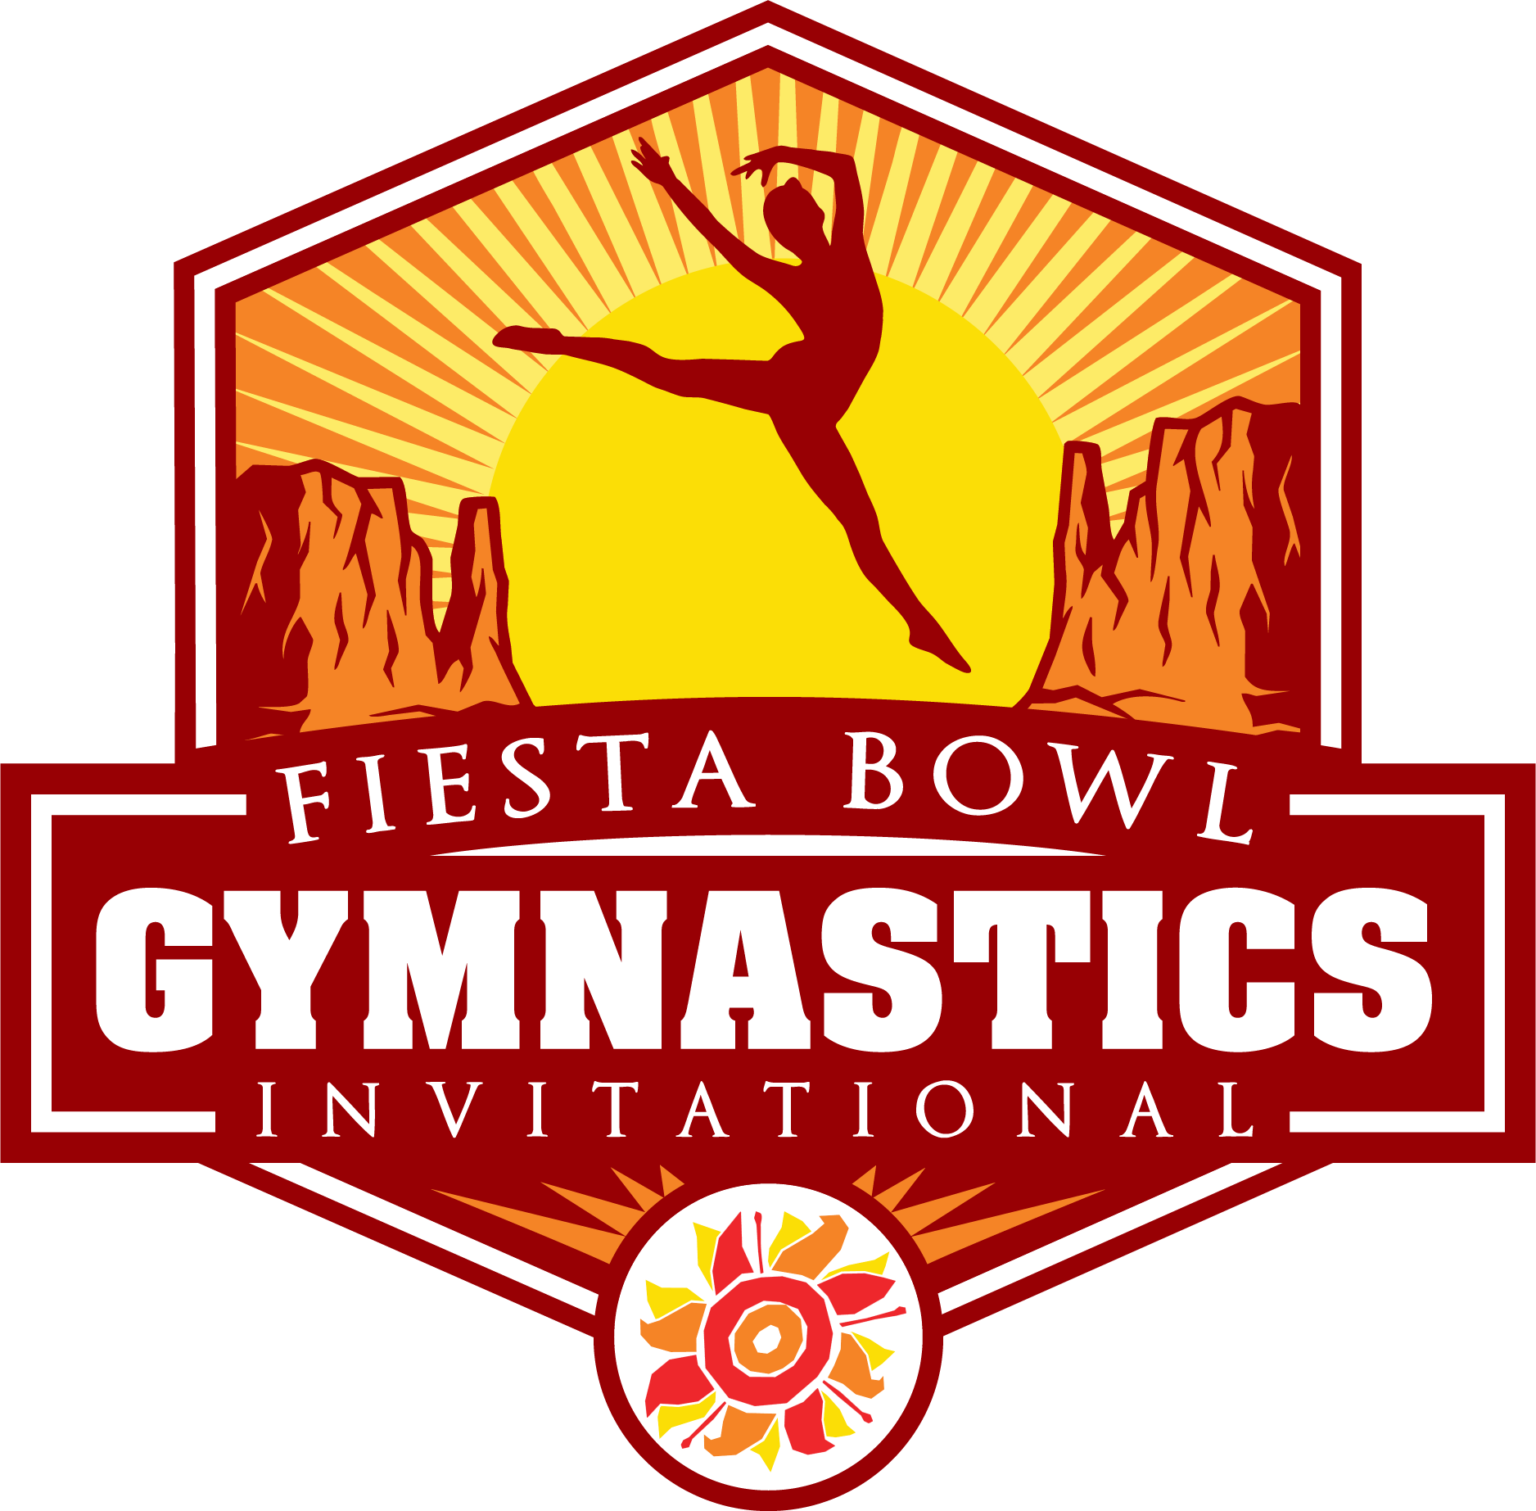 Fiesta Bowl Meet America's longest running women's gymnastics competition